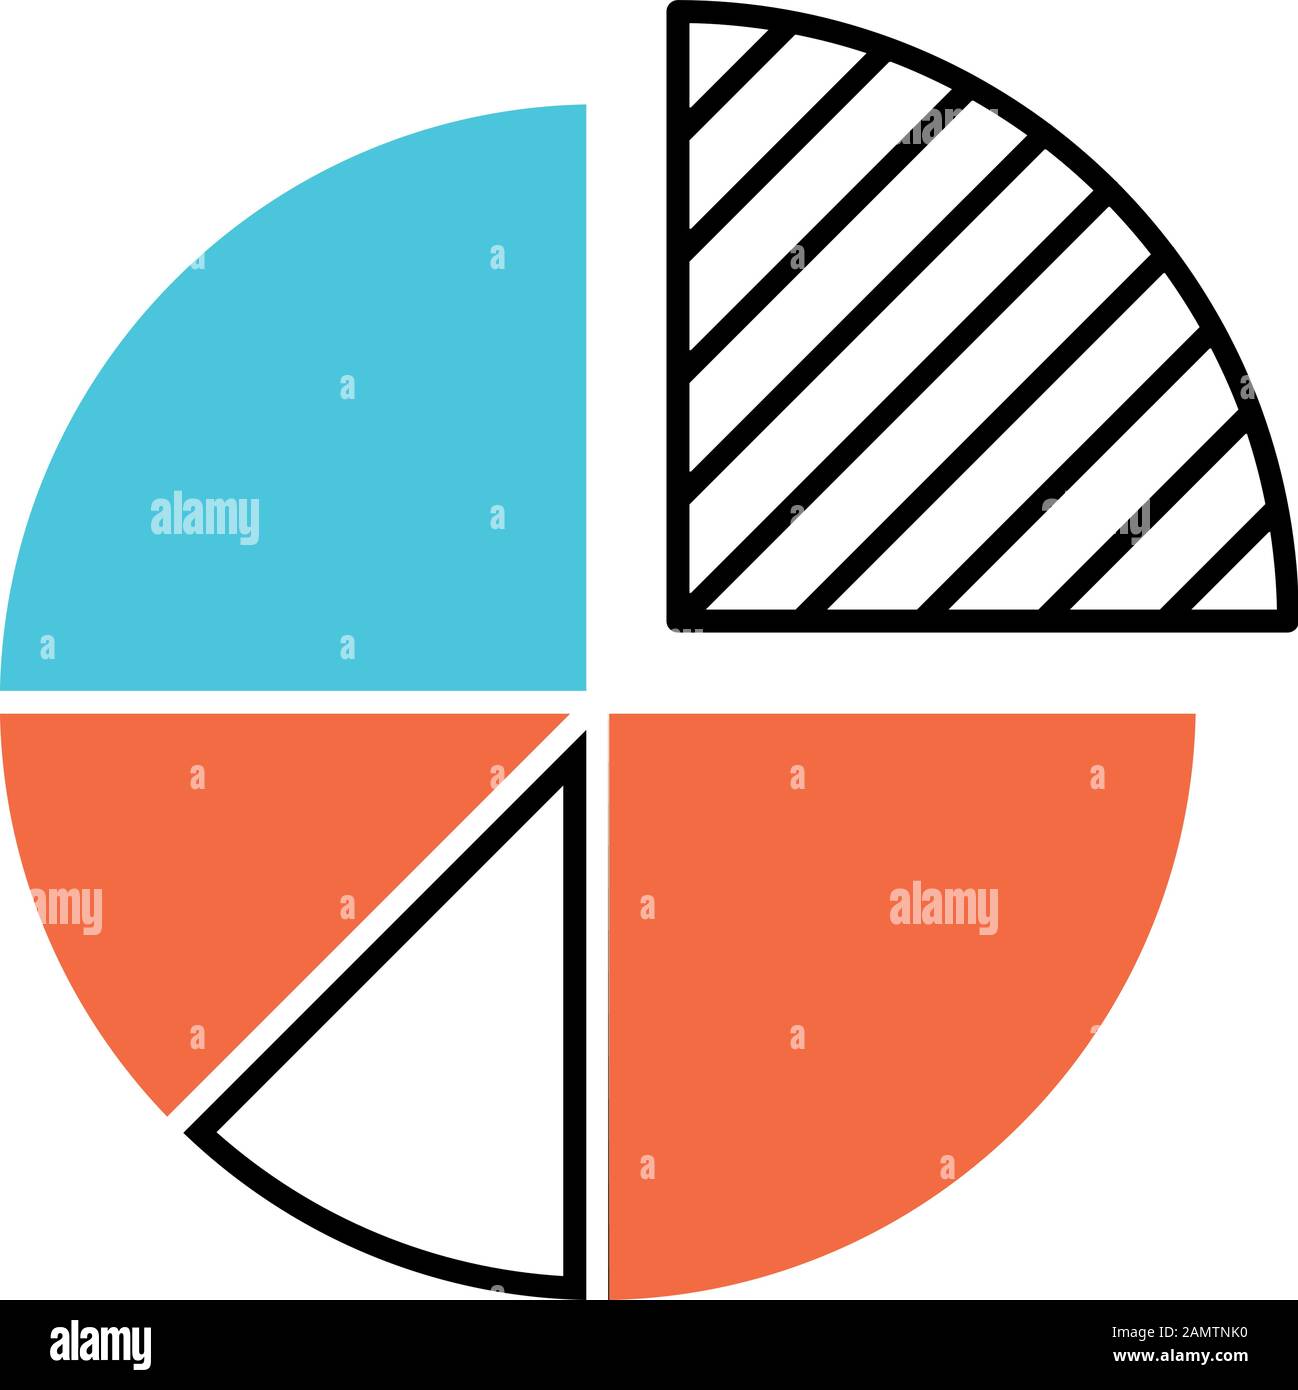 Pie chart color icon. Circle divided into parts. Diagram. Circular statistical graphic. Symbolic representation of information. Statistics data visual Stock Vector